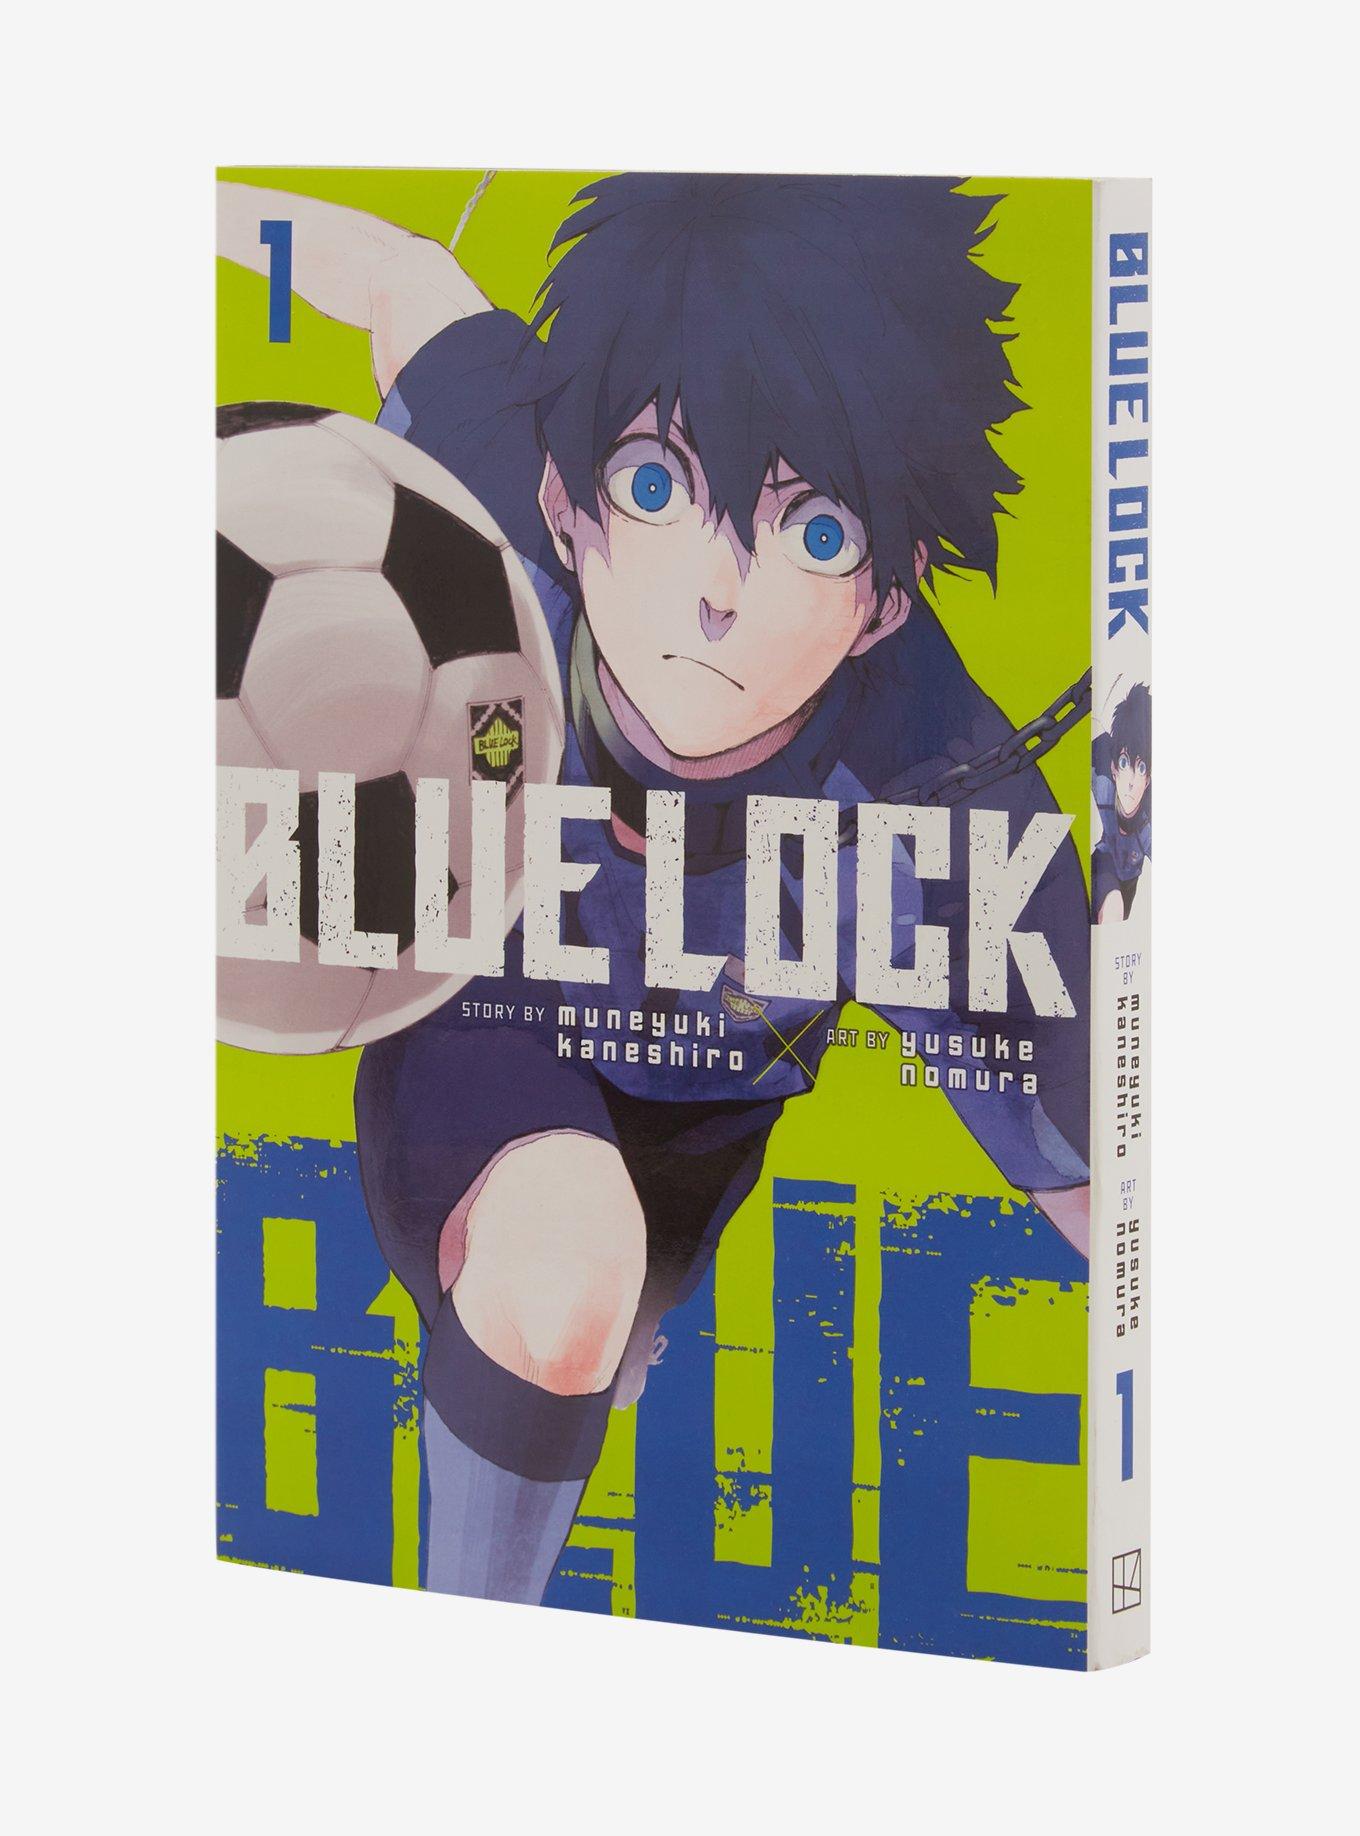 Blue Lock Manga Volume 4